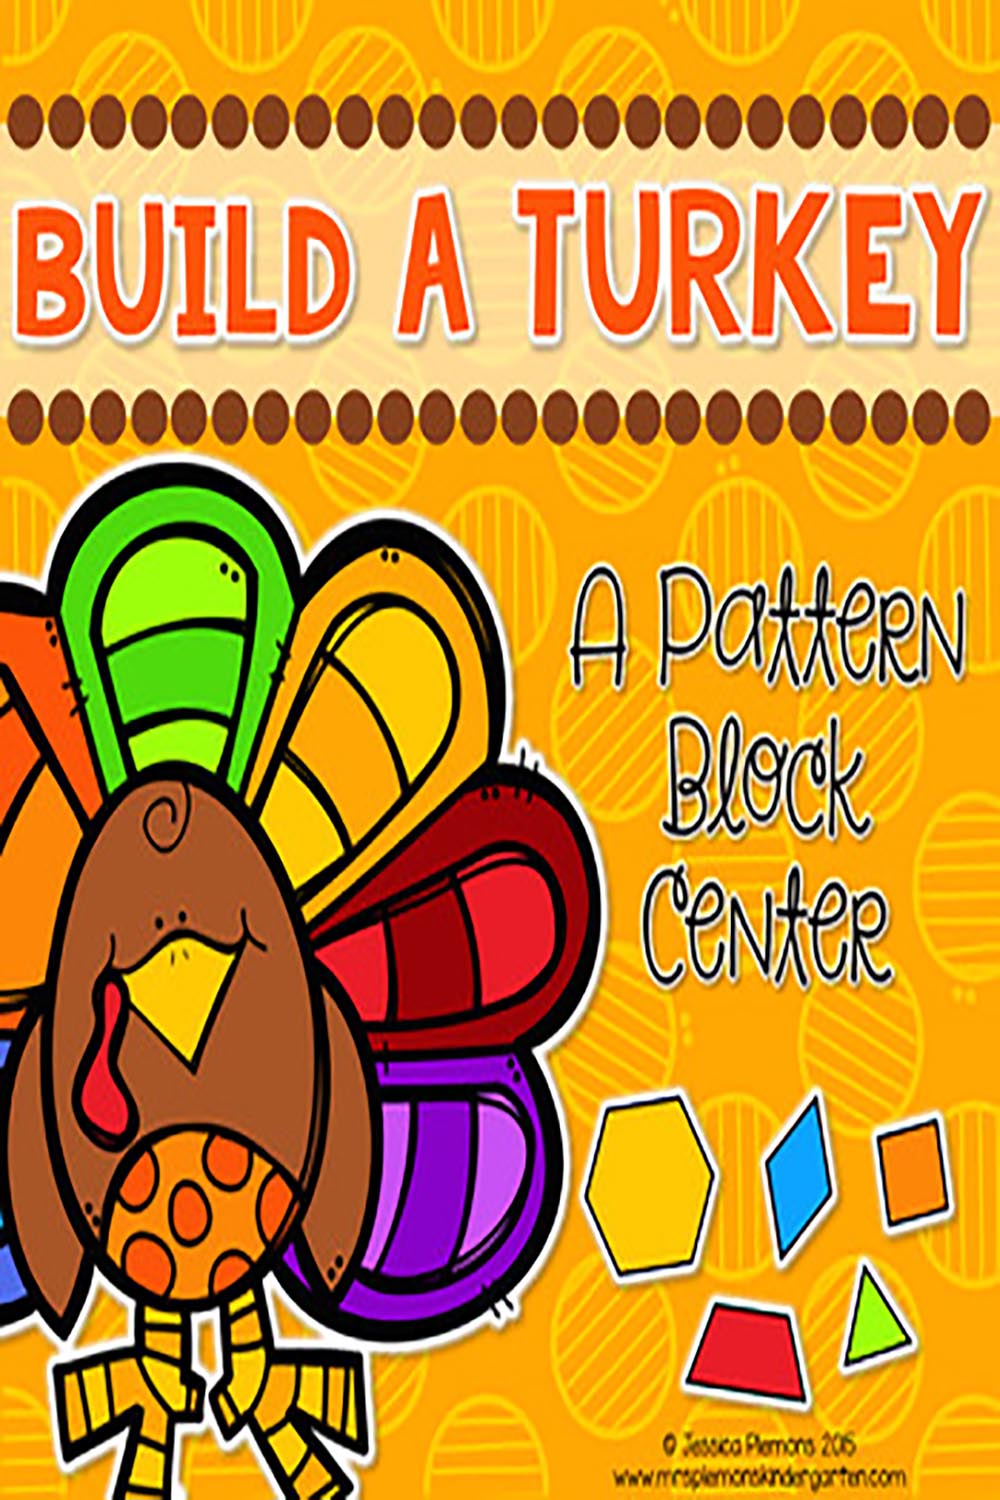 Build a Turkey: A Pattern Block Math Center pinterest preview image.